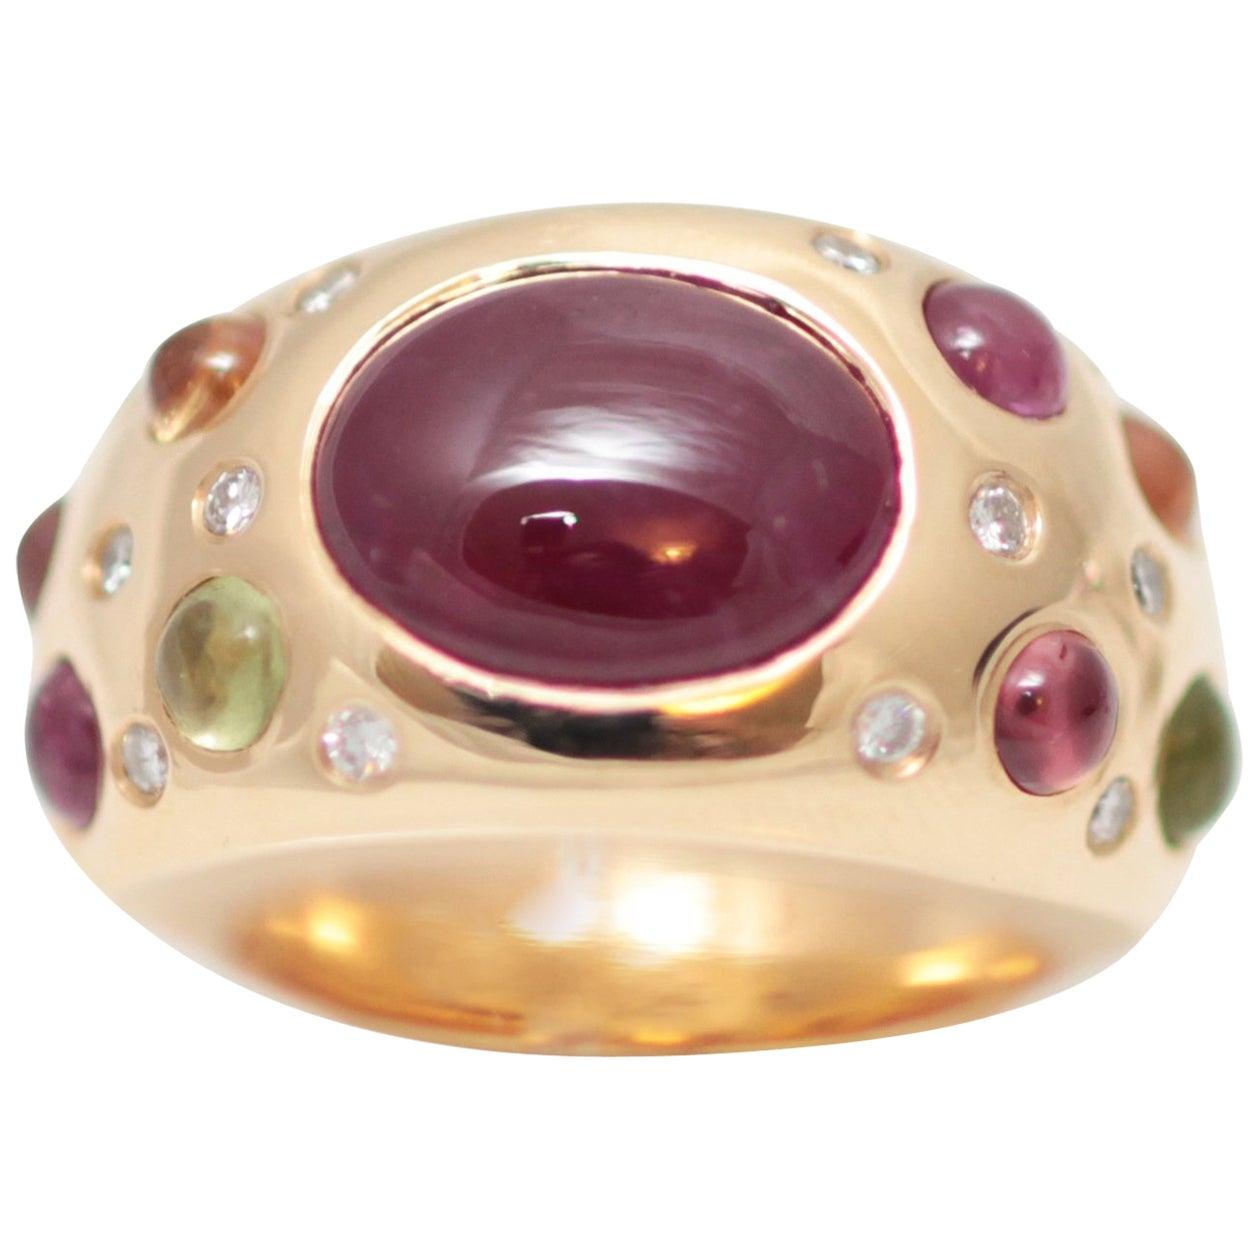 5 Carat Ruby, Diamonds Sapphires Pave 18 Karat Gold Bombe Ring